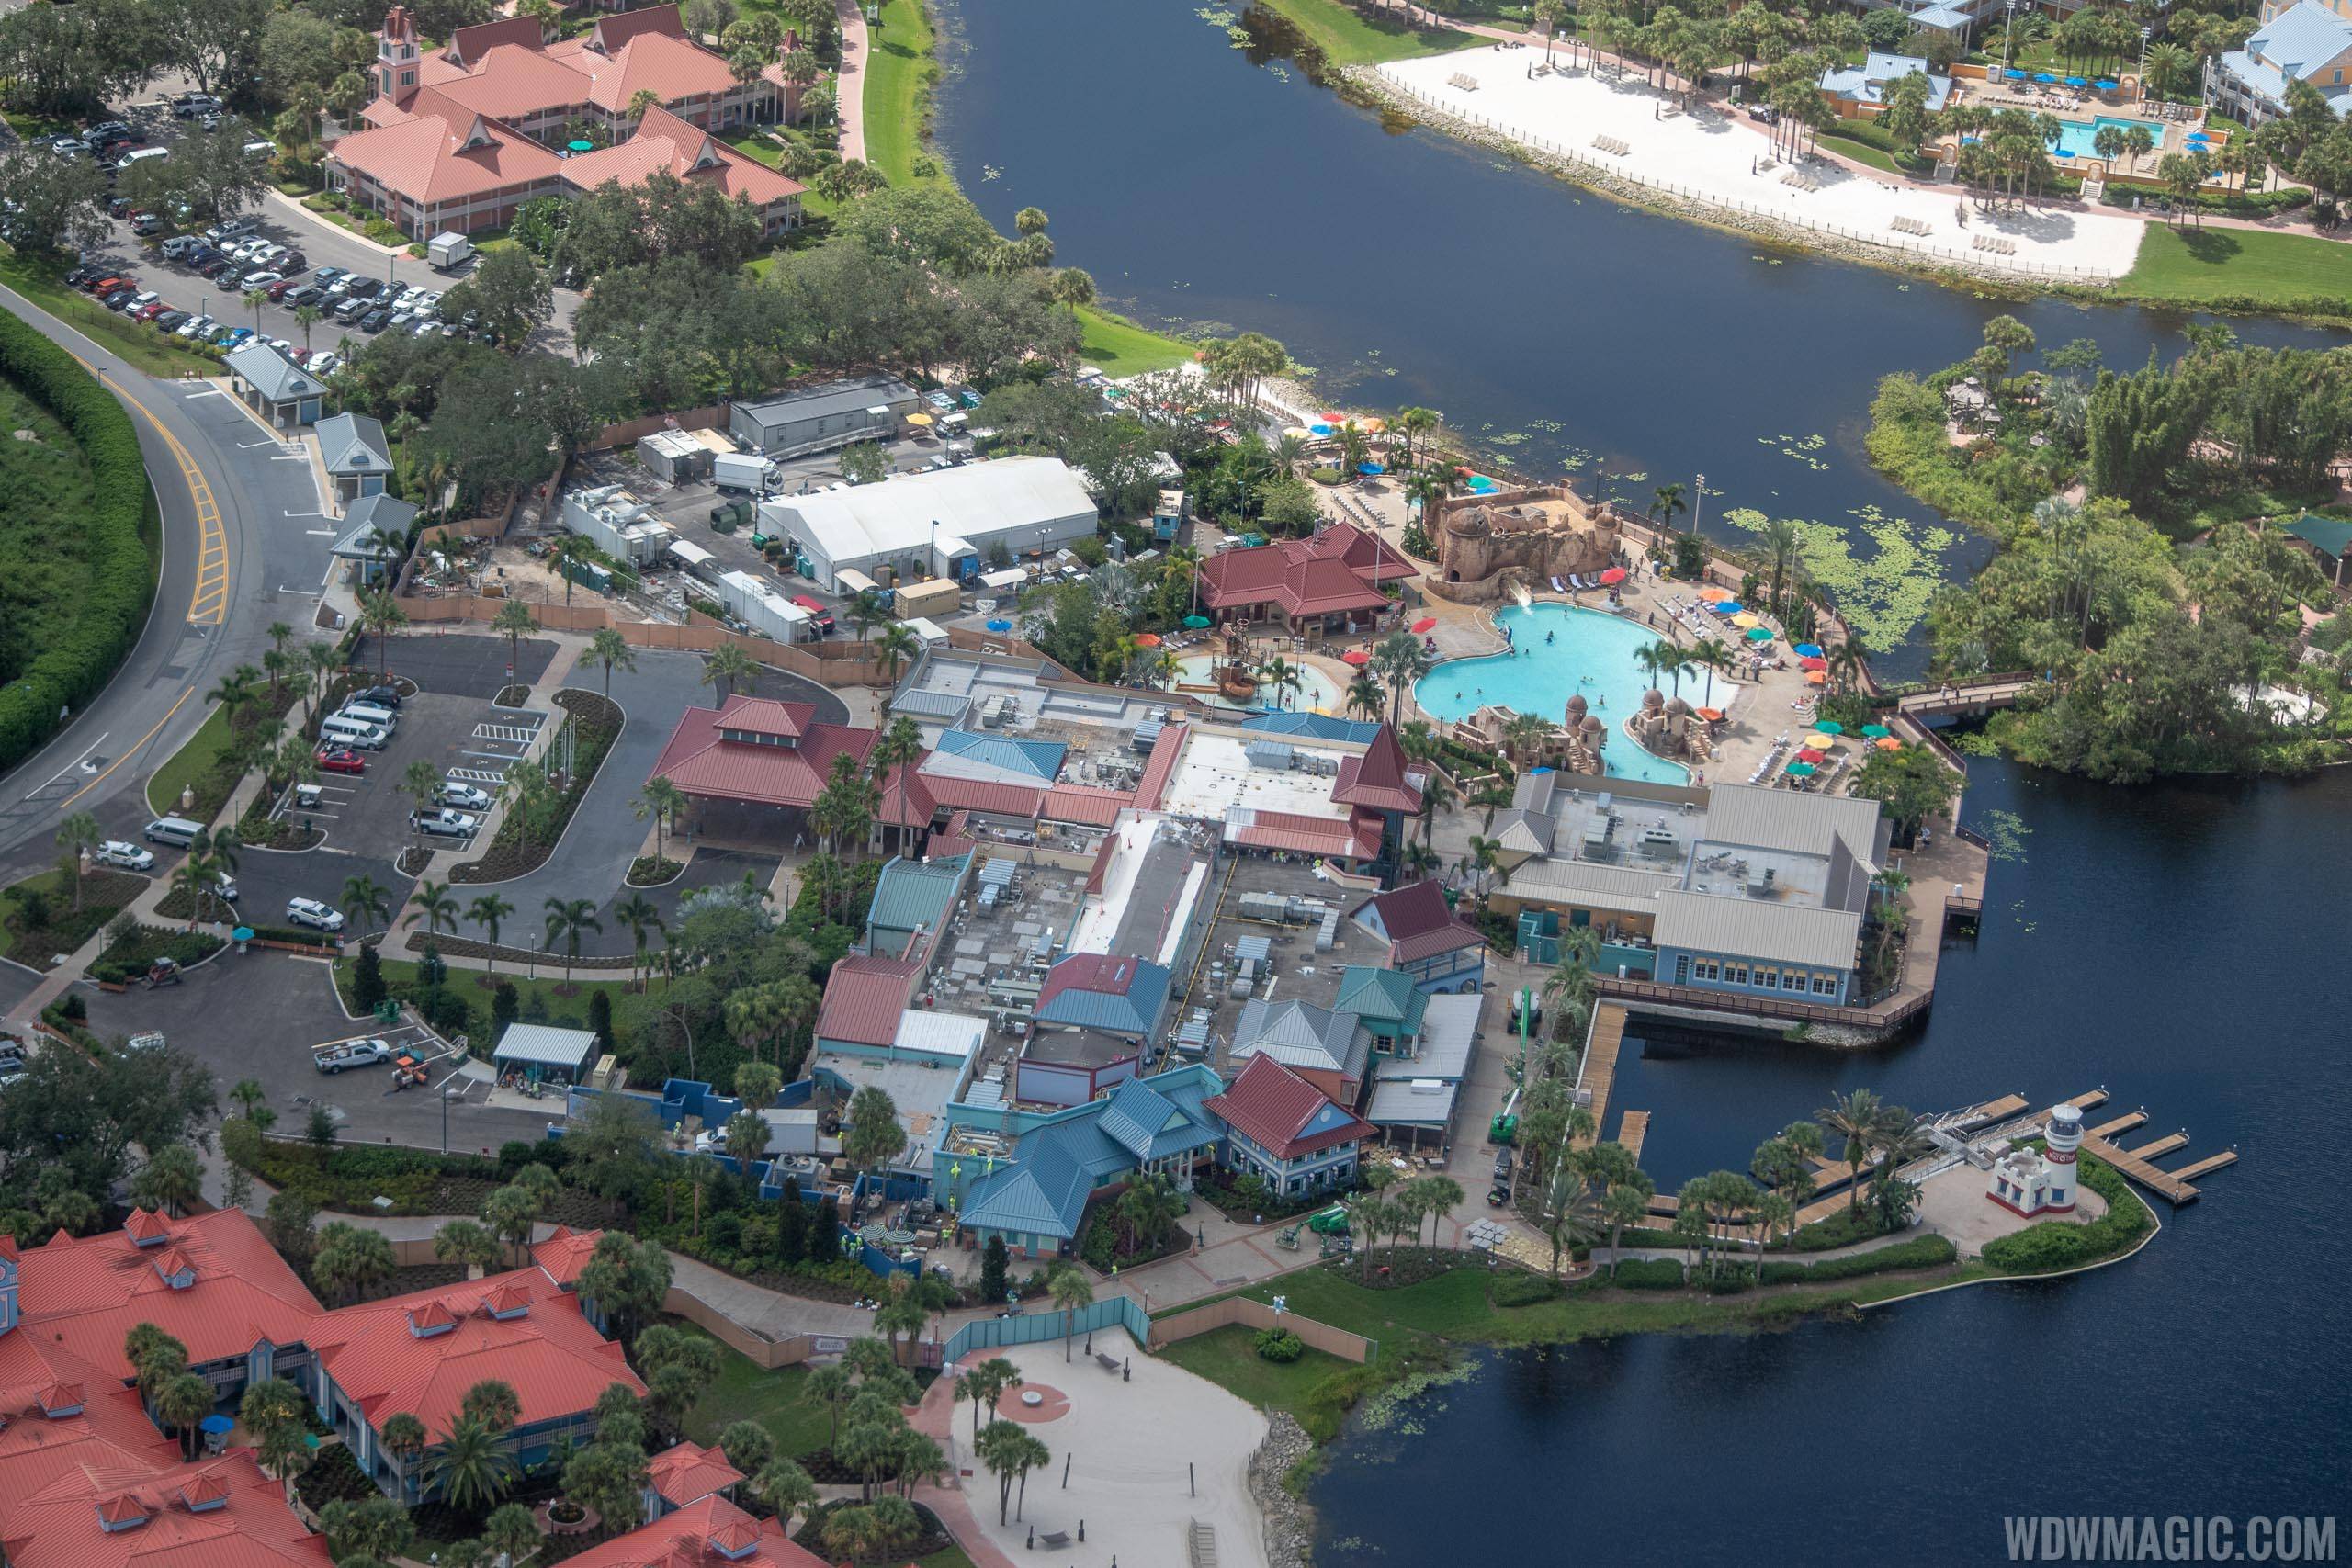 Pool and water play areas closed for refurbishment at Disney's Caribbean Beach Resort